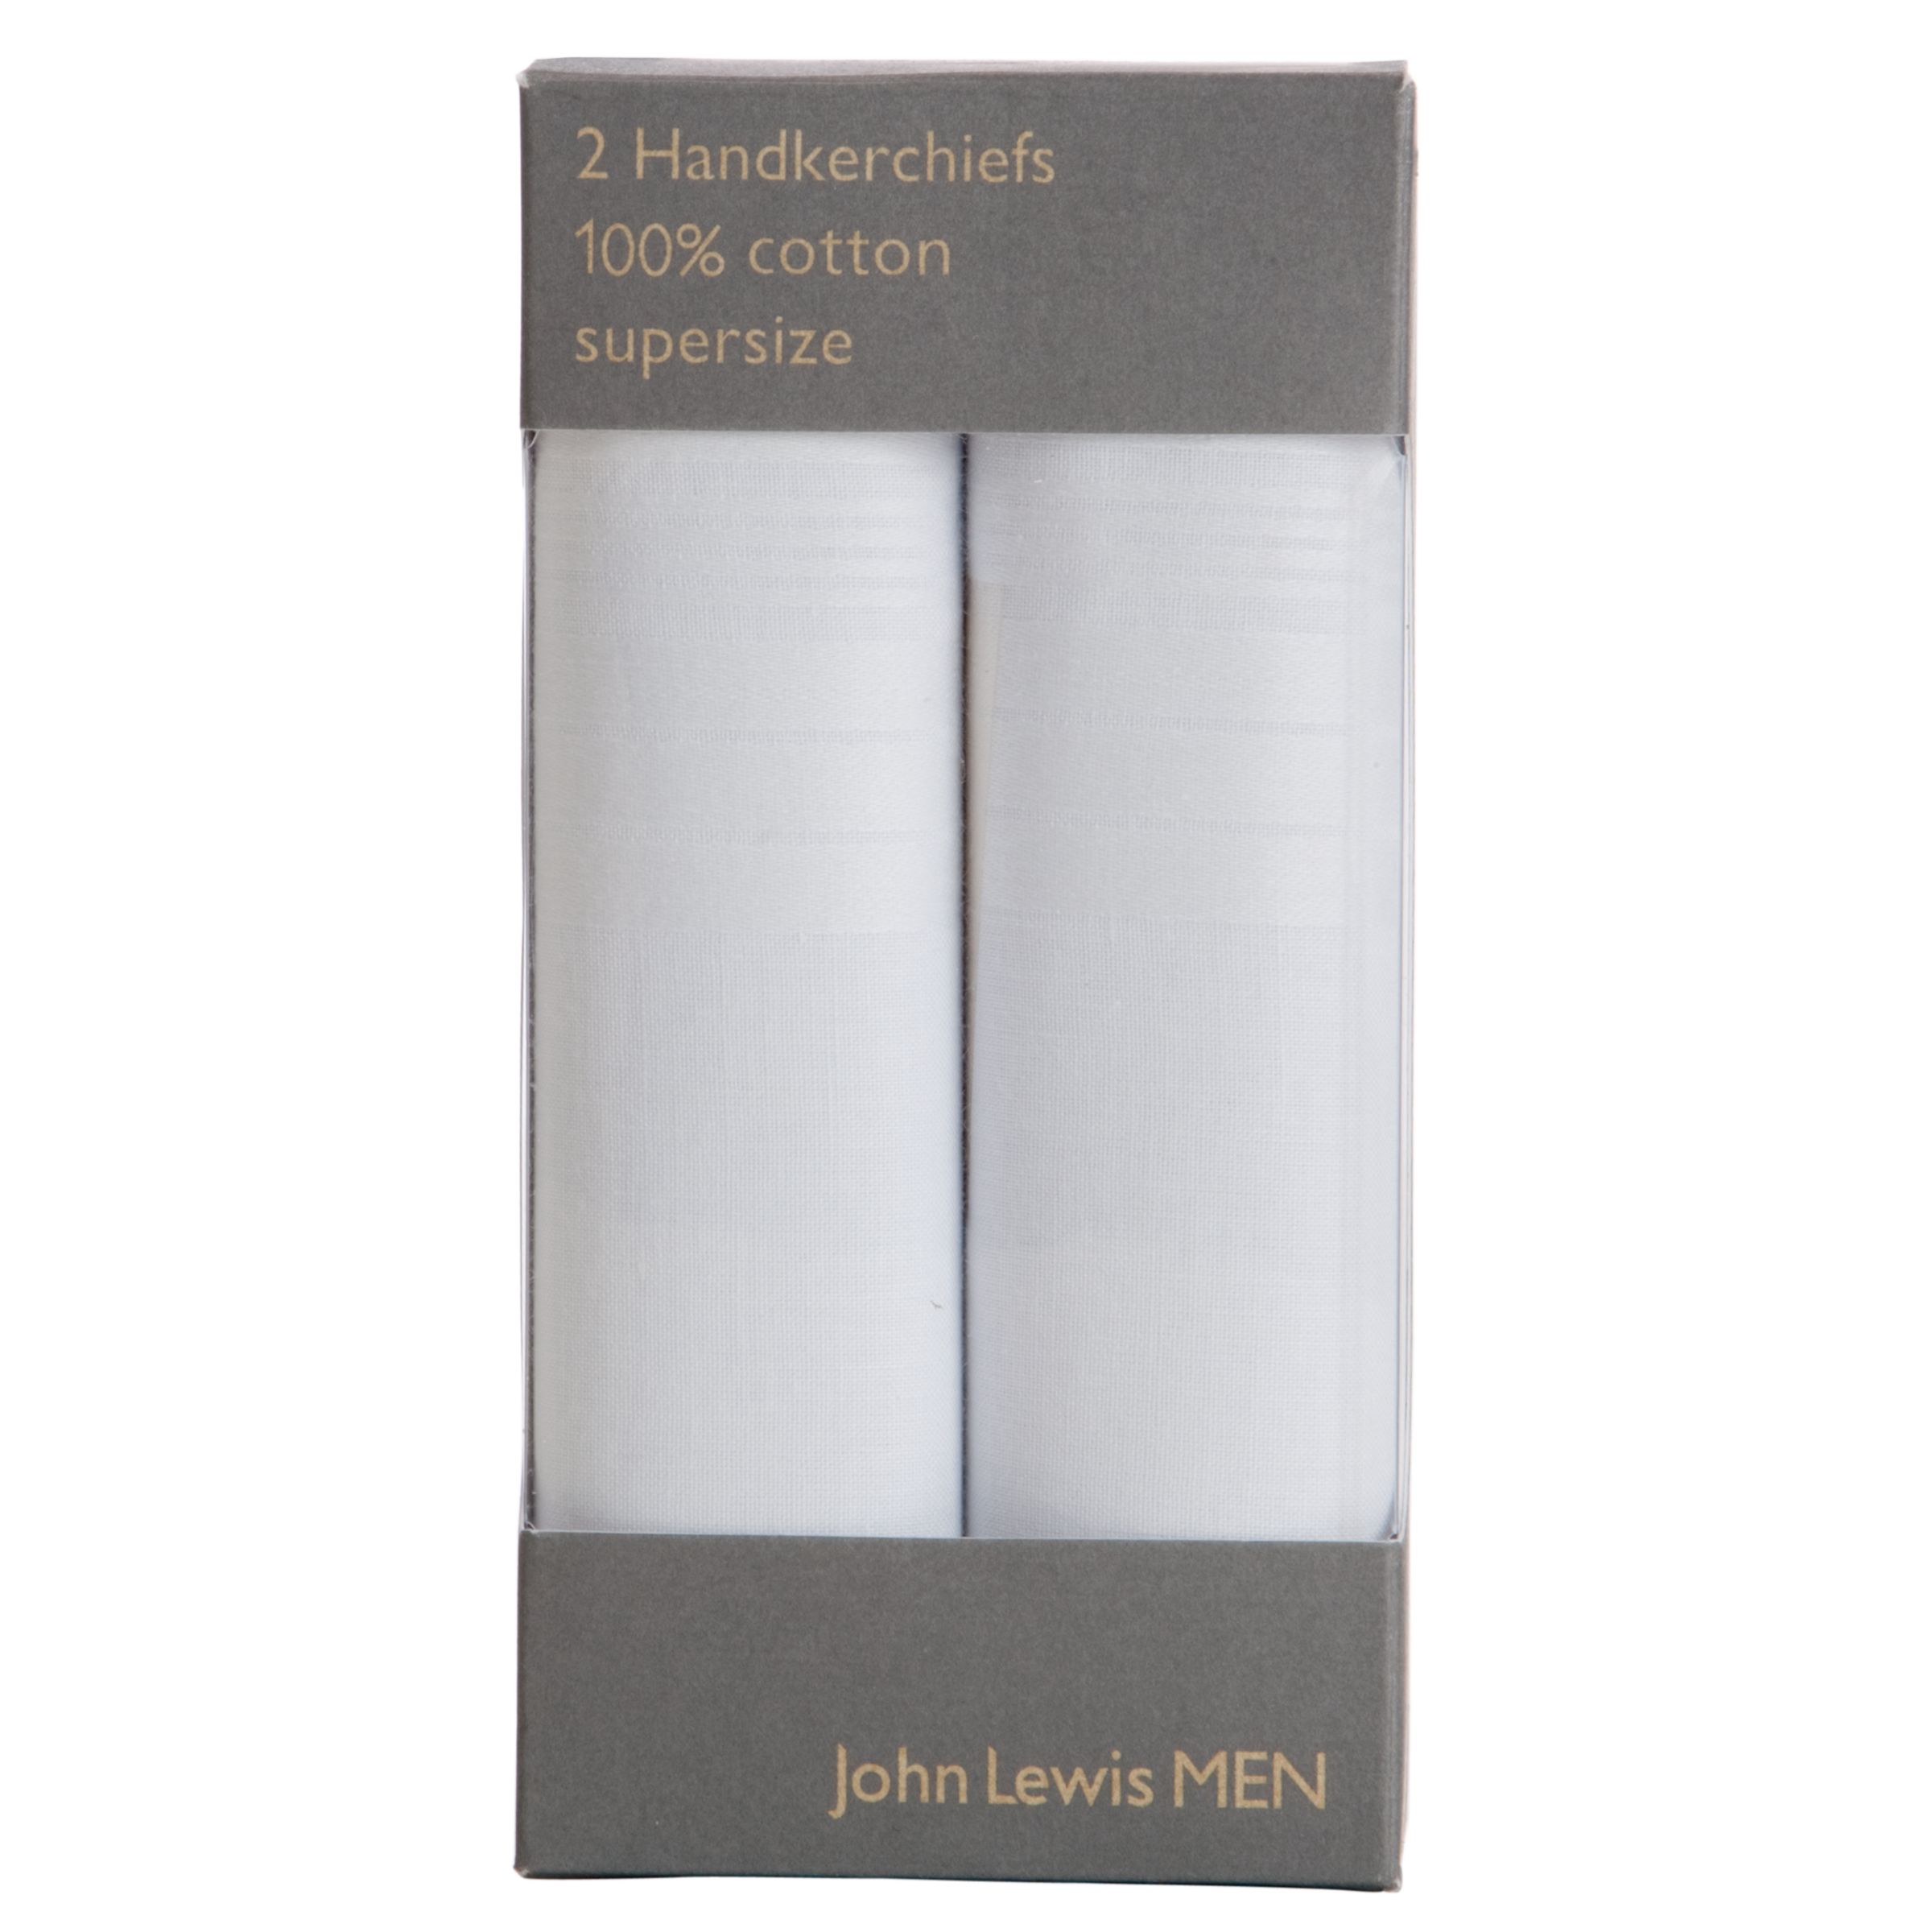 John Lewis Supersize Handkerchiefs, Pack of 2, White